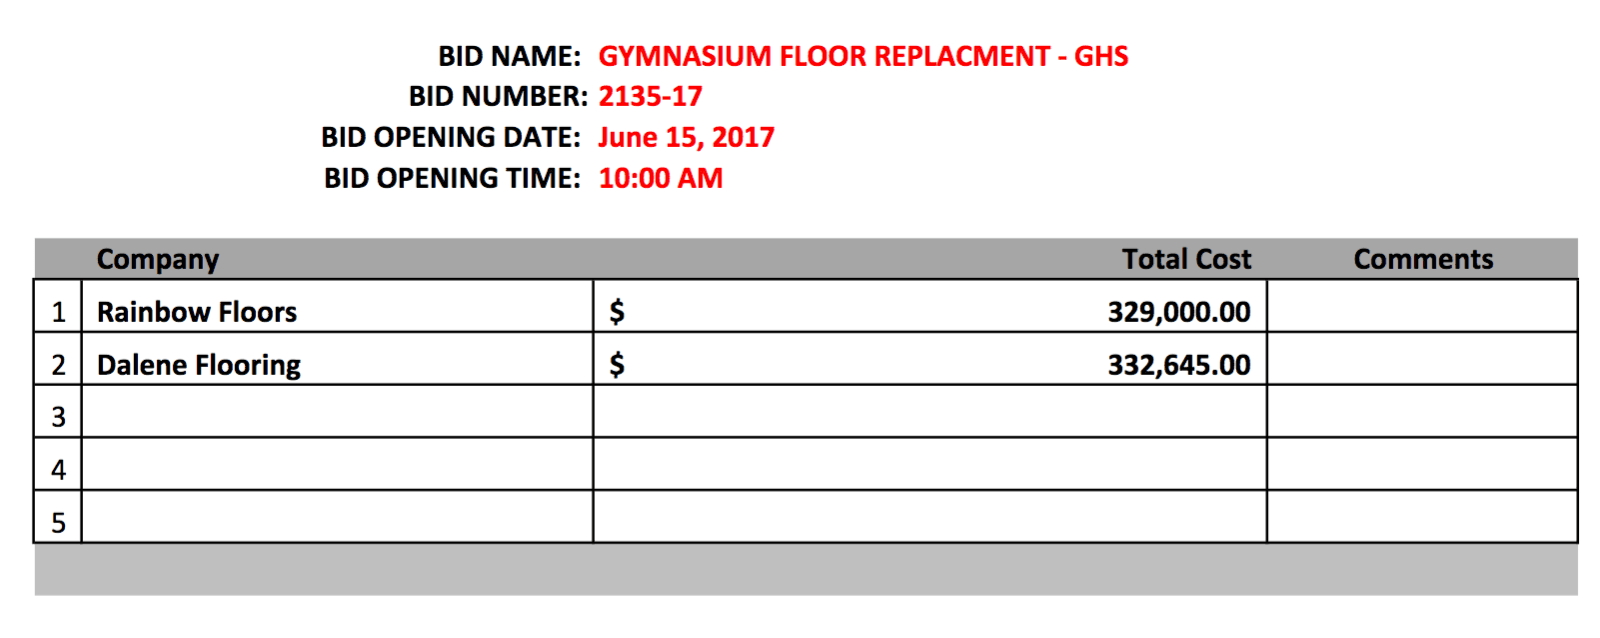 Gymnasium Floor Replacement bids for Greenwich High School